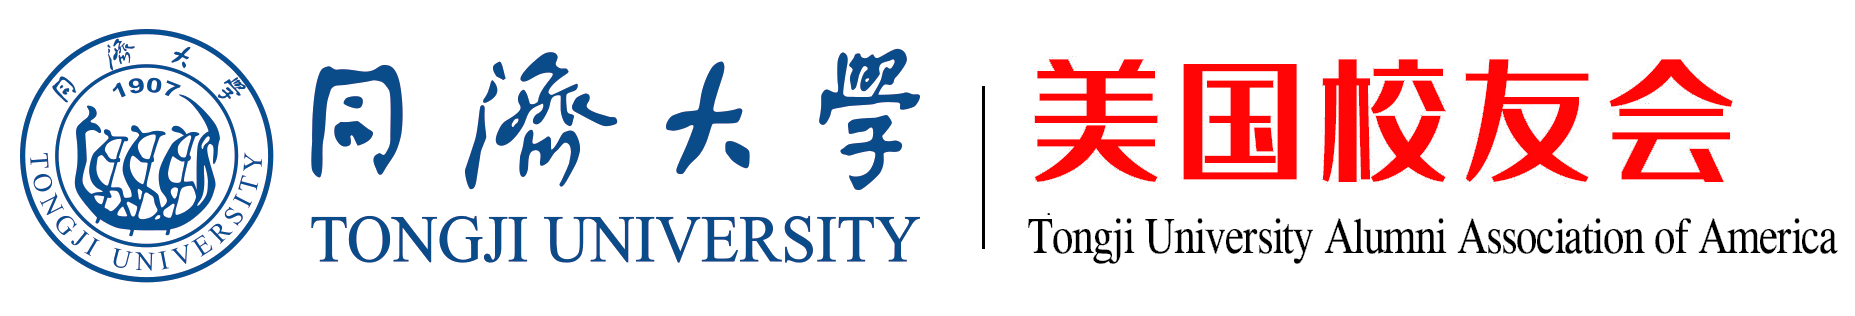 Tongji University Alumni Association of America